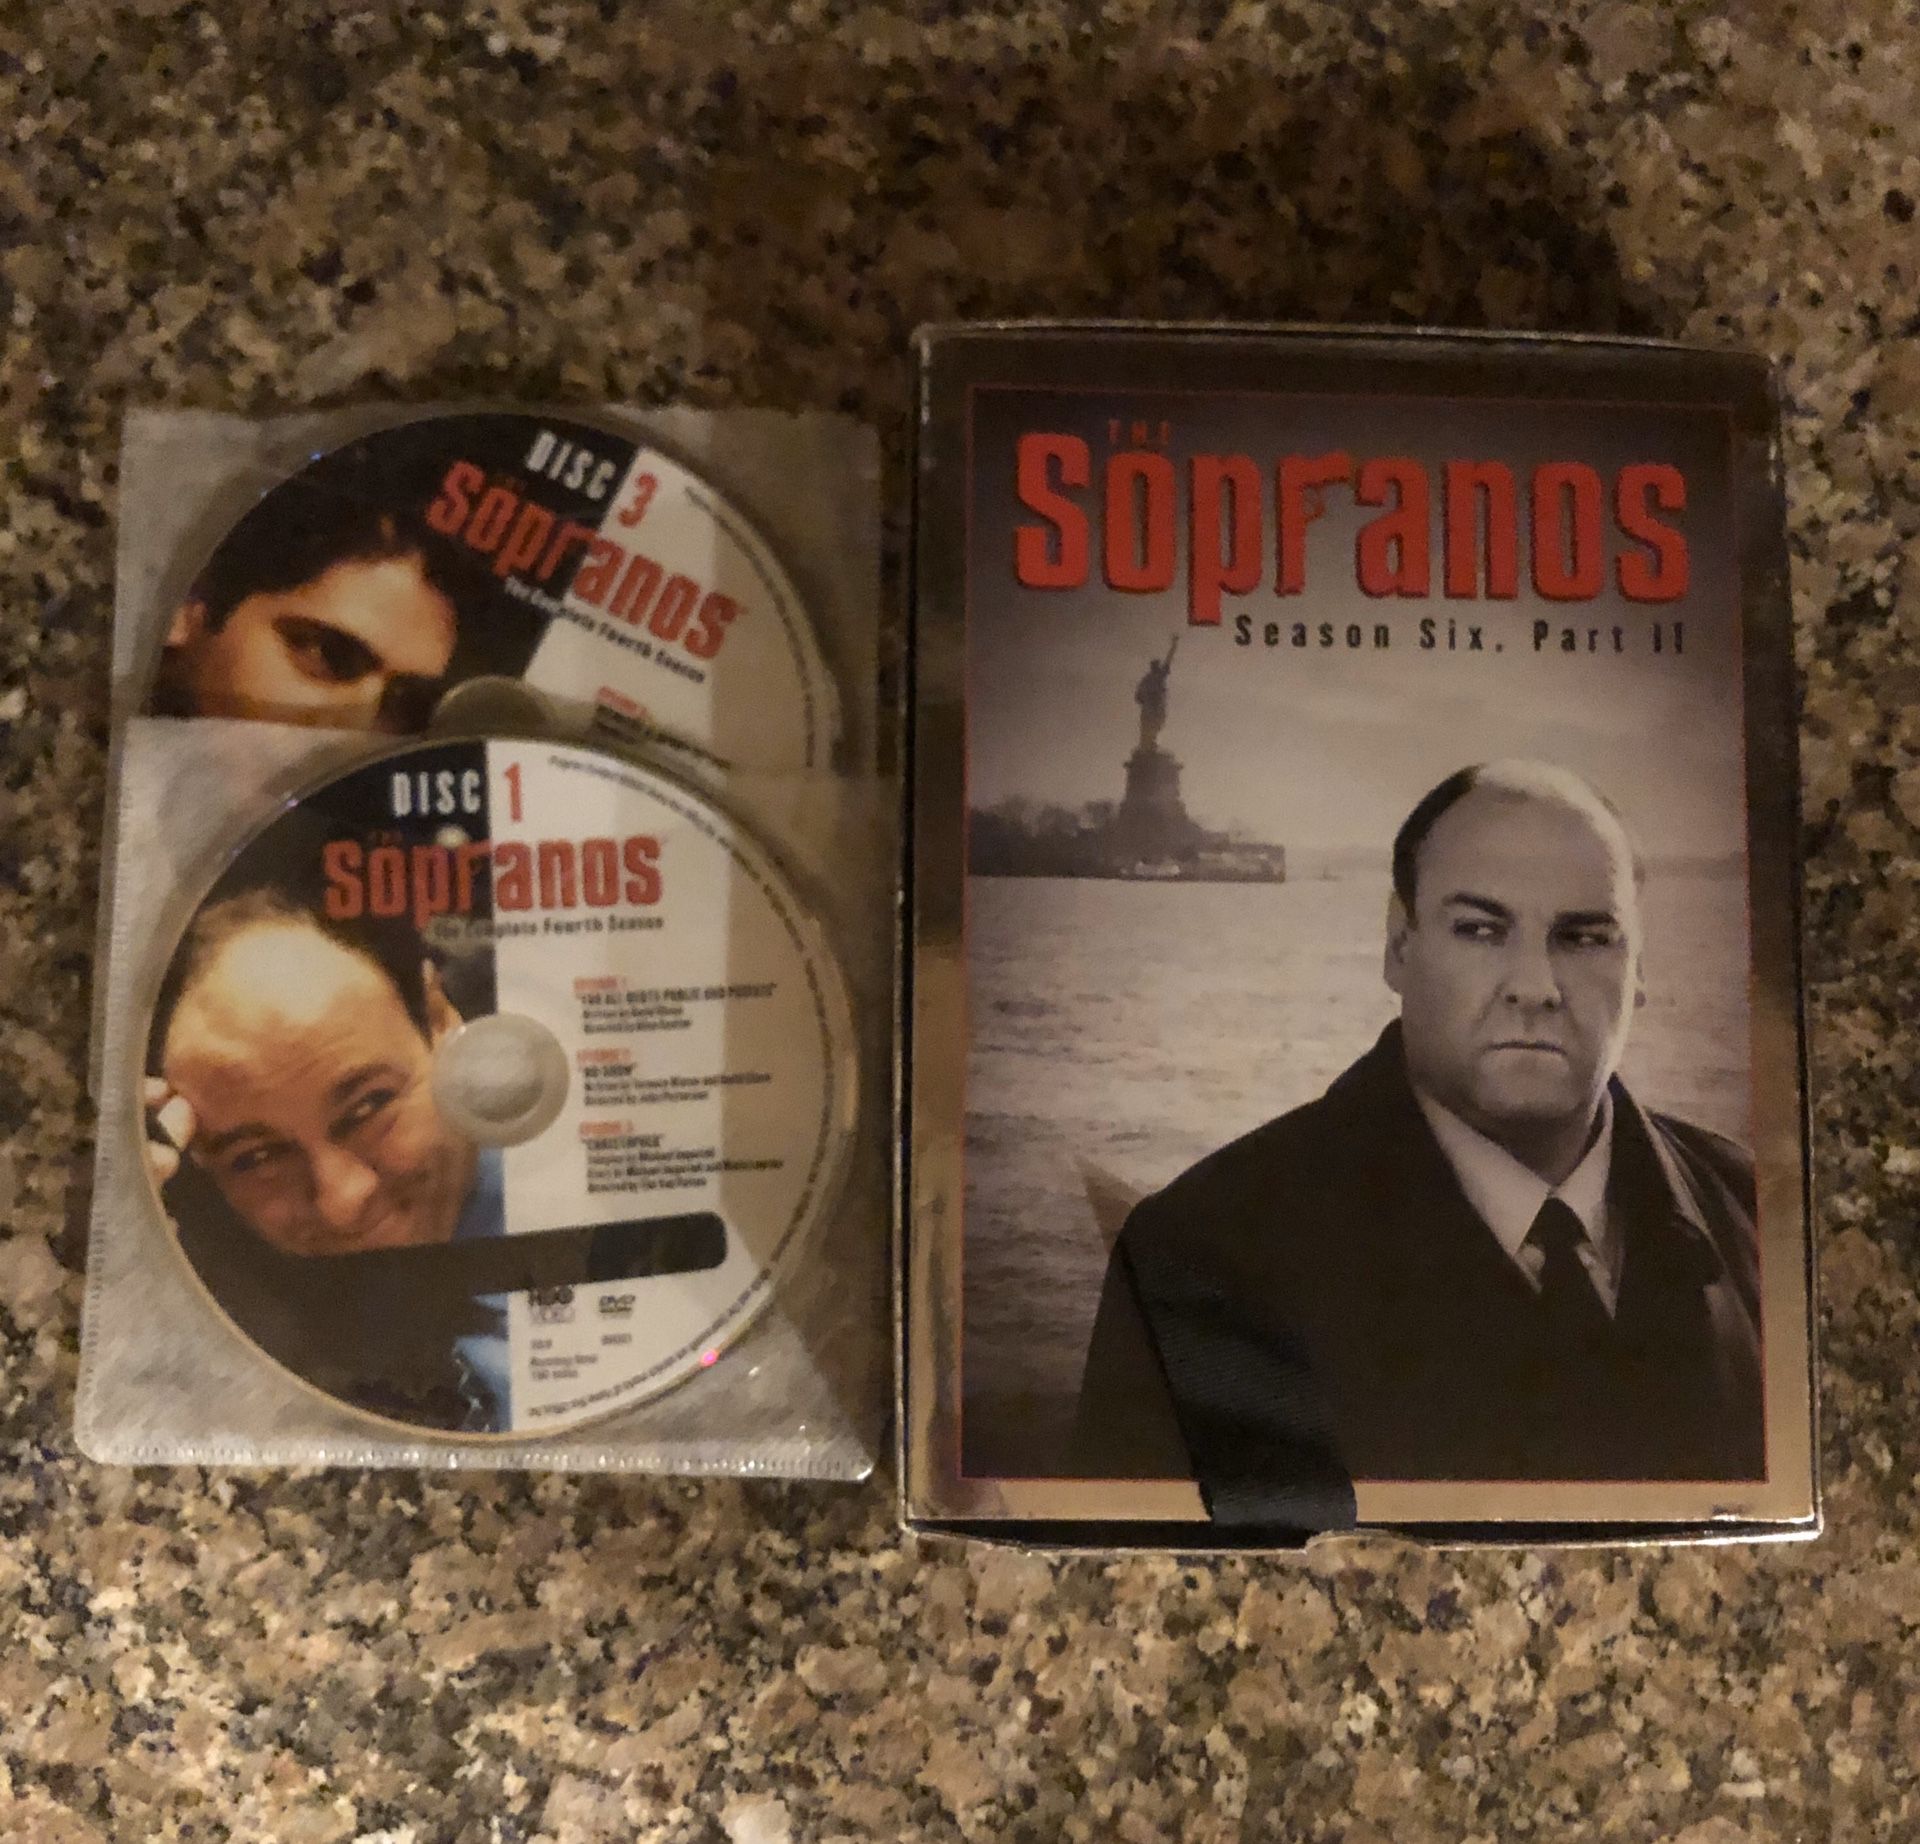 Sopranos DVD’s